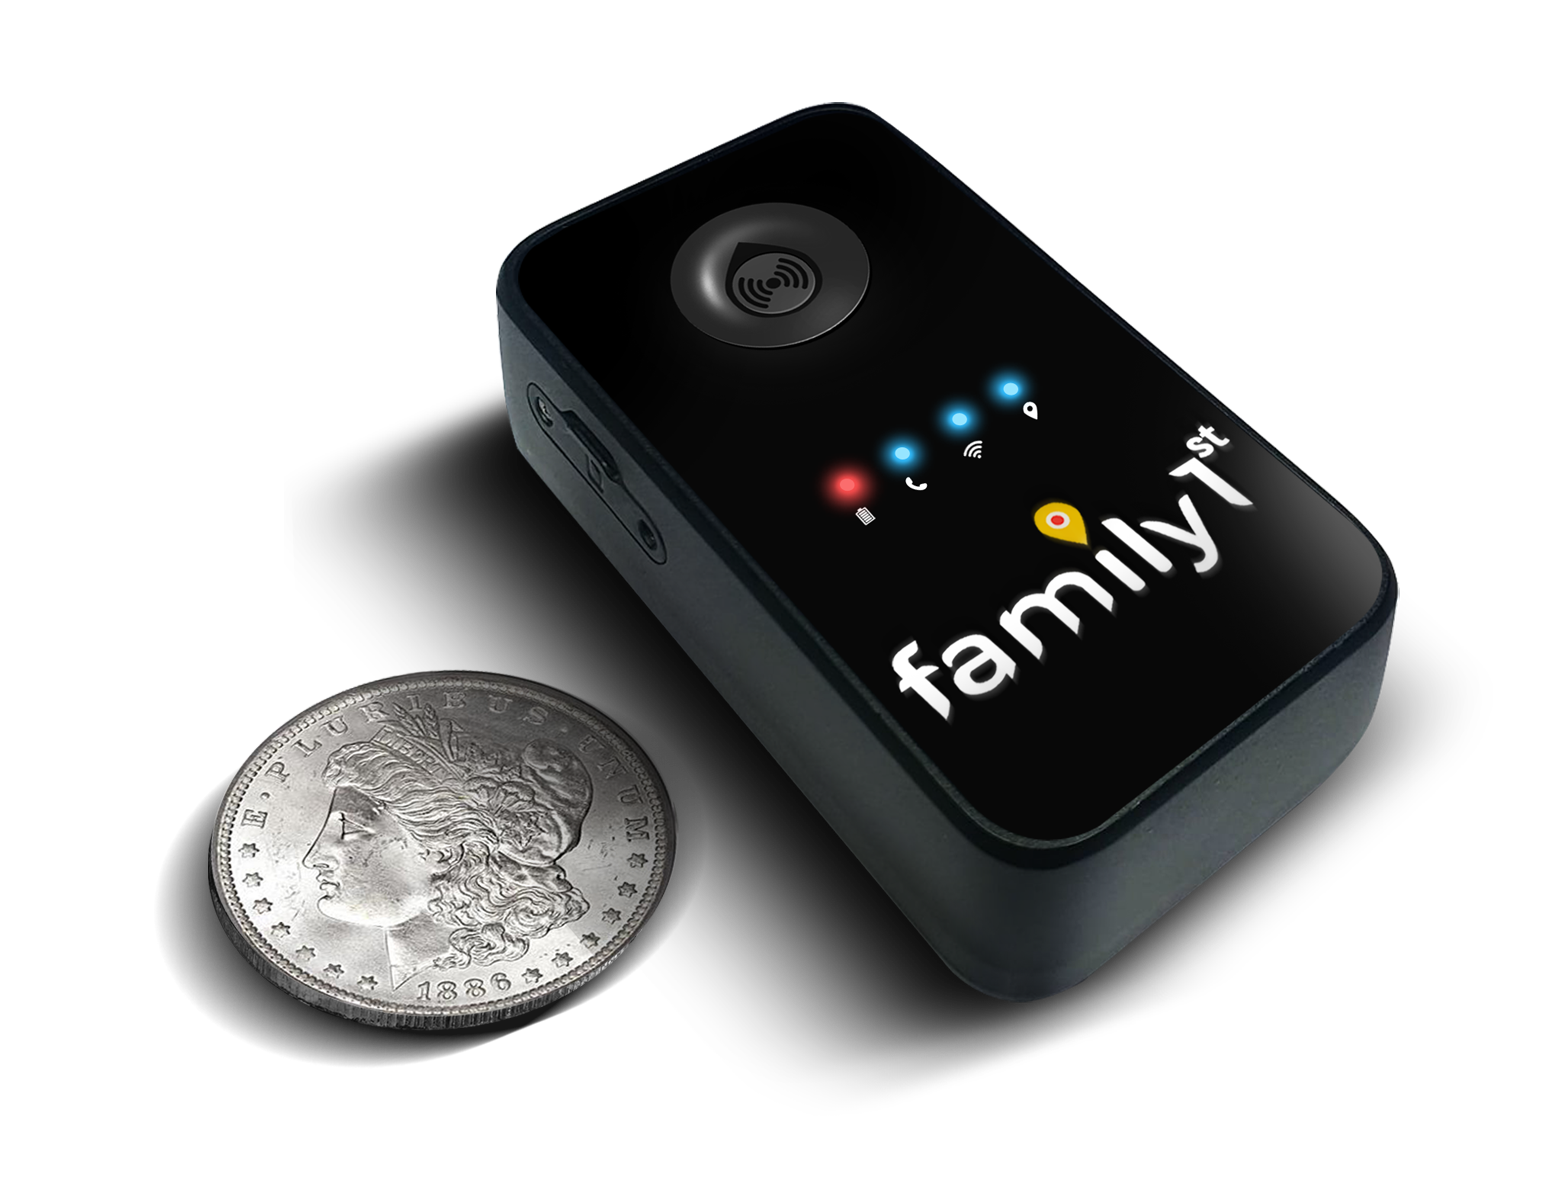 Family1st GPS tracker